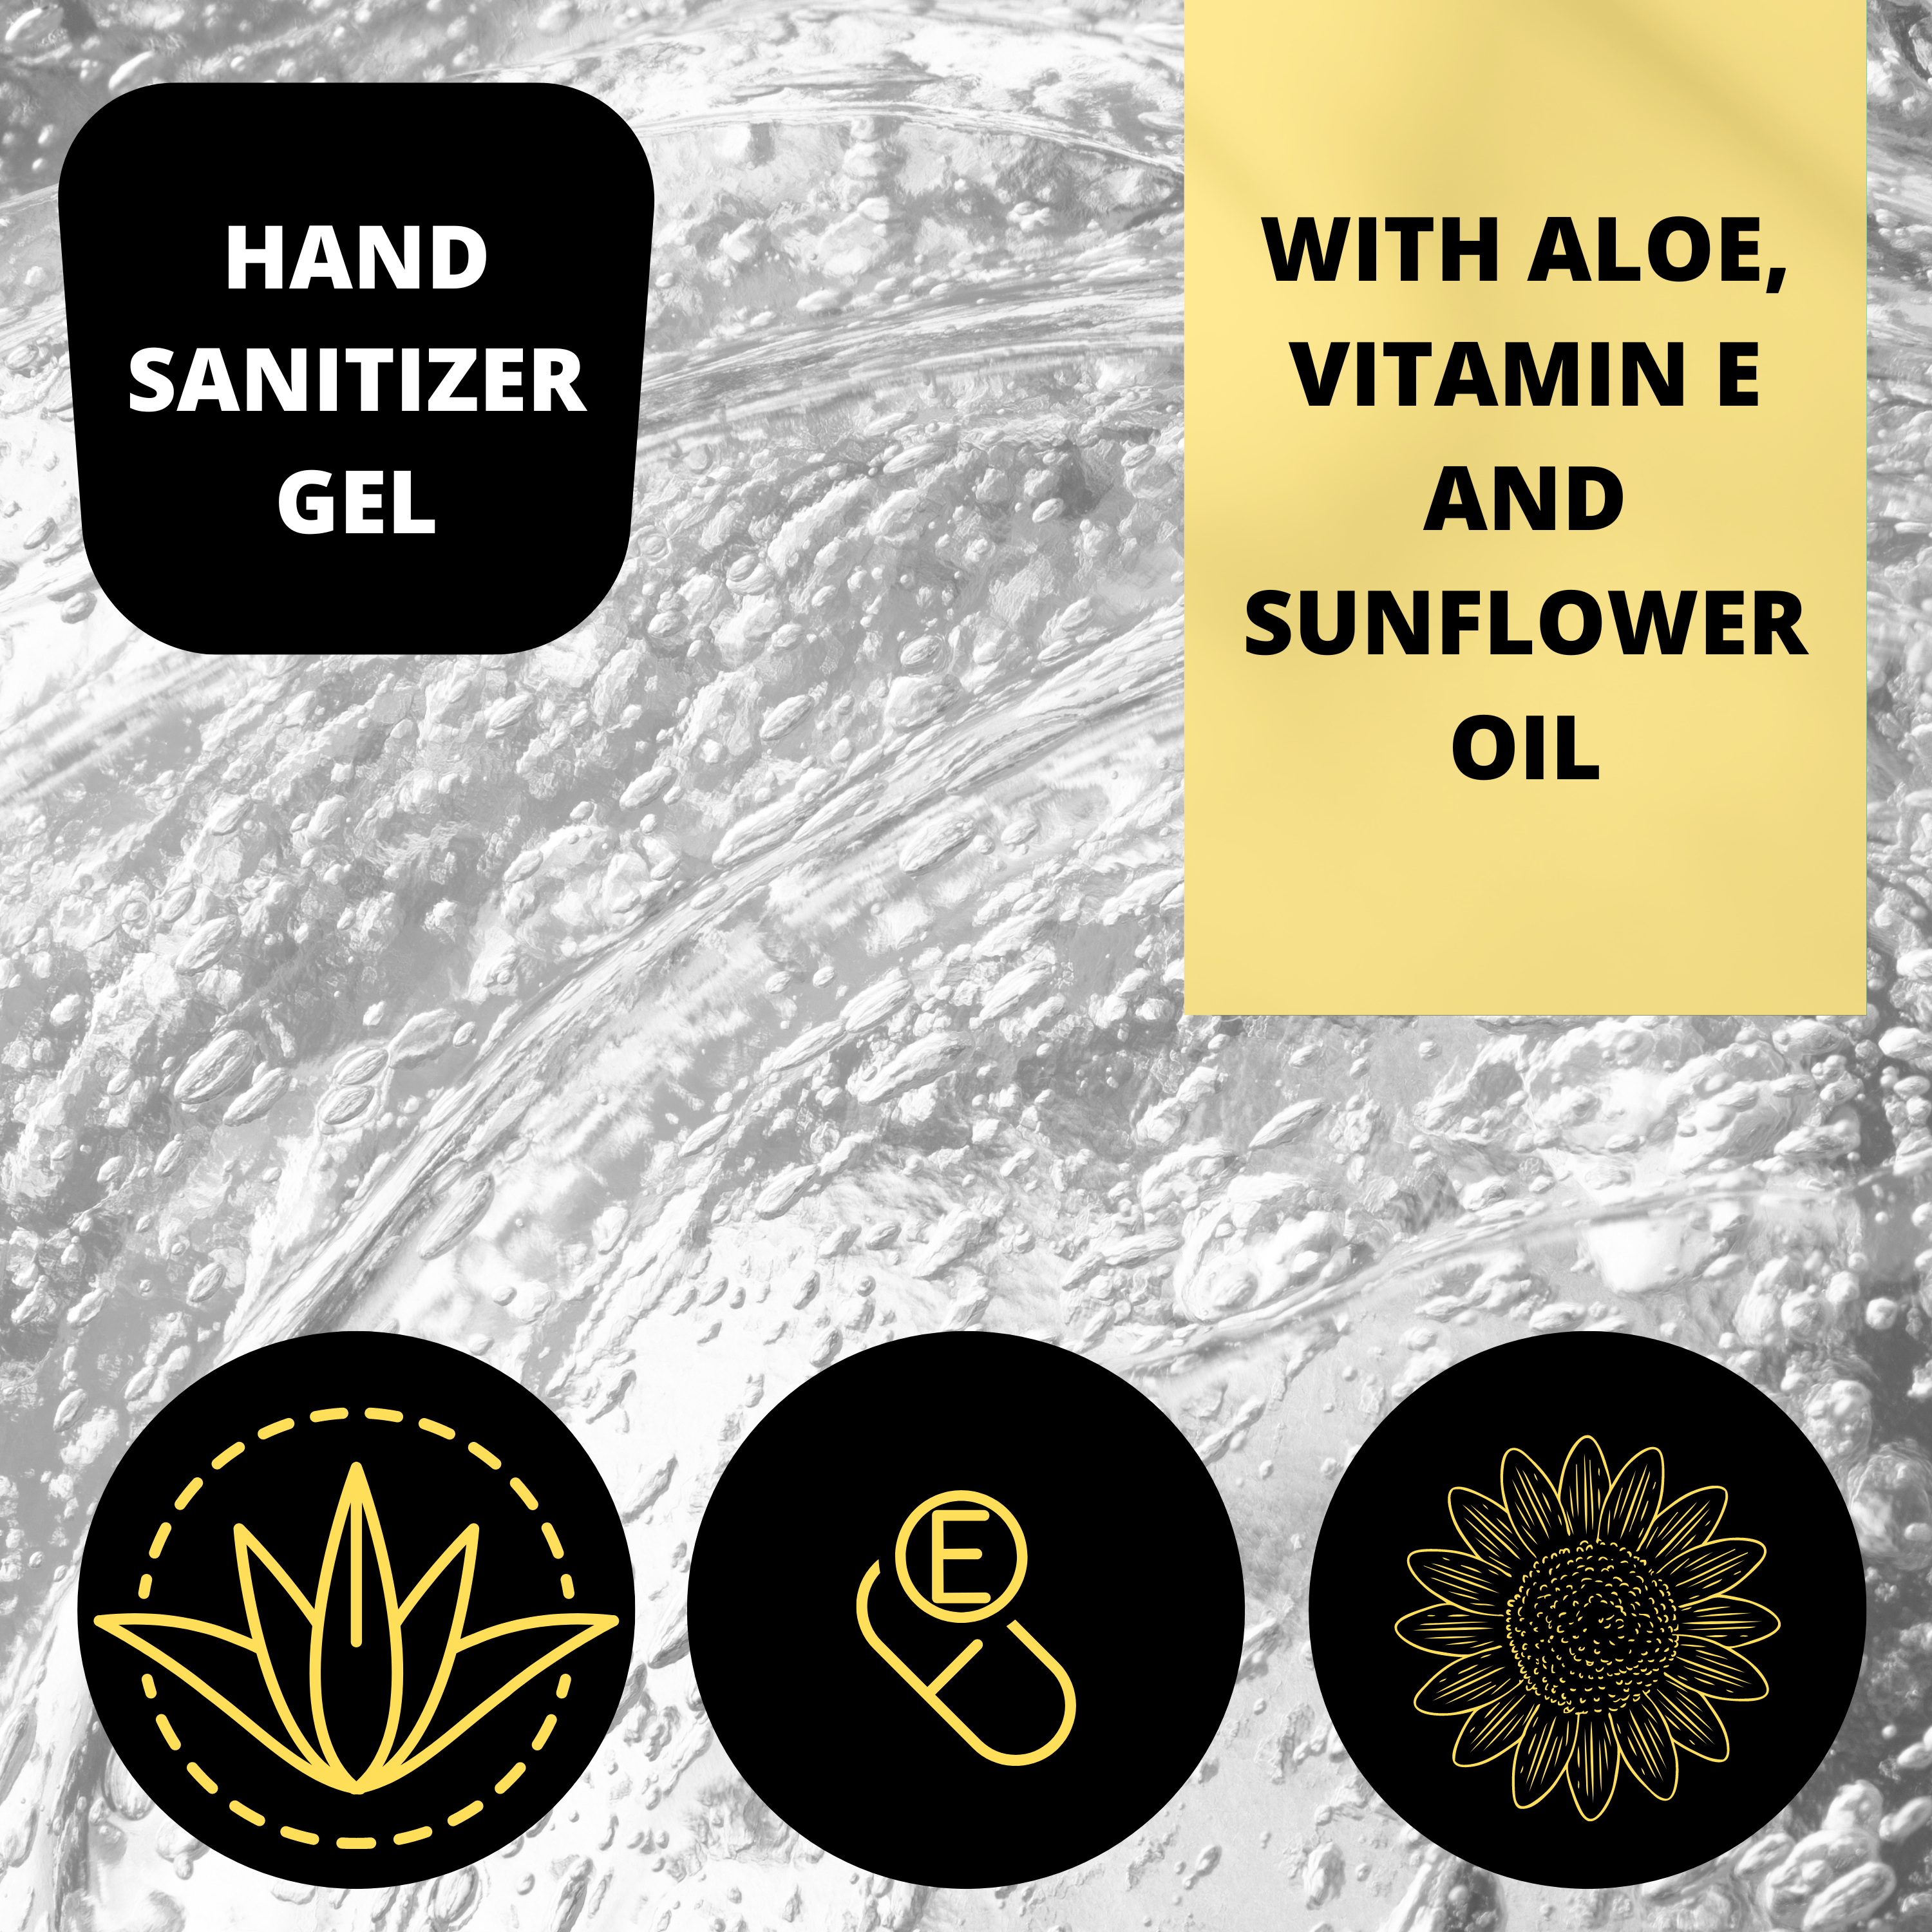 Black Canyon Apothecary Orange Scented Hand Sanitizer Gel